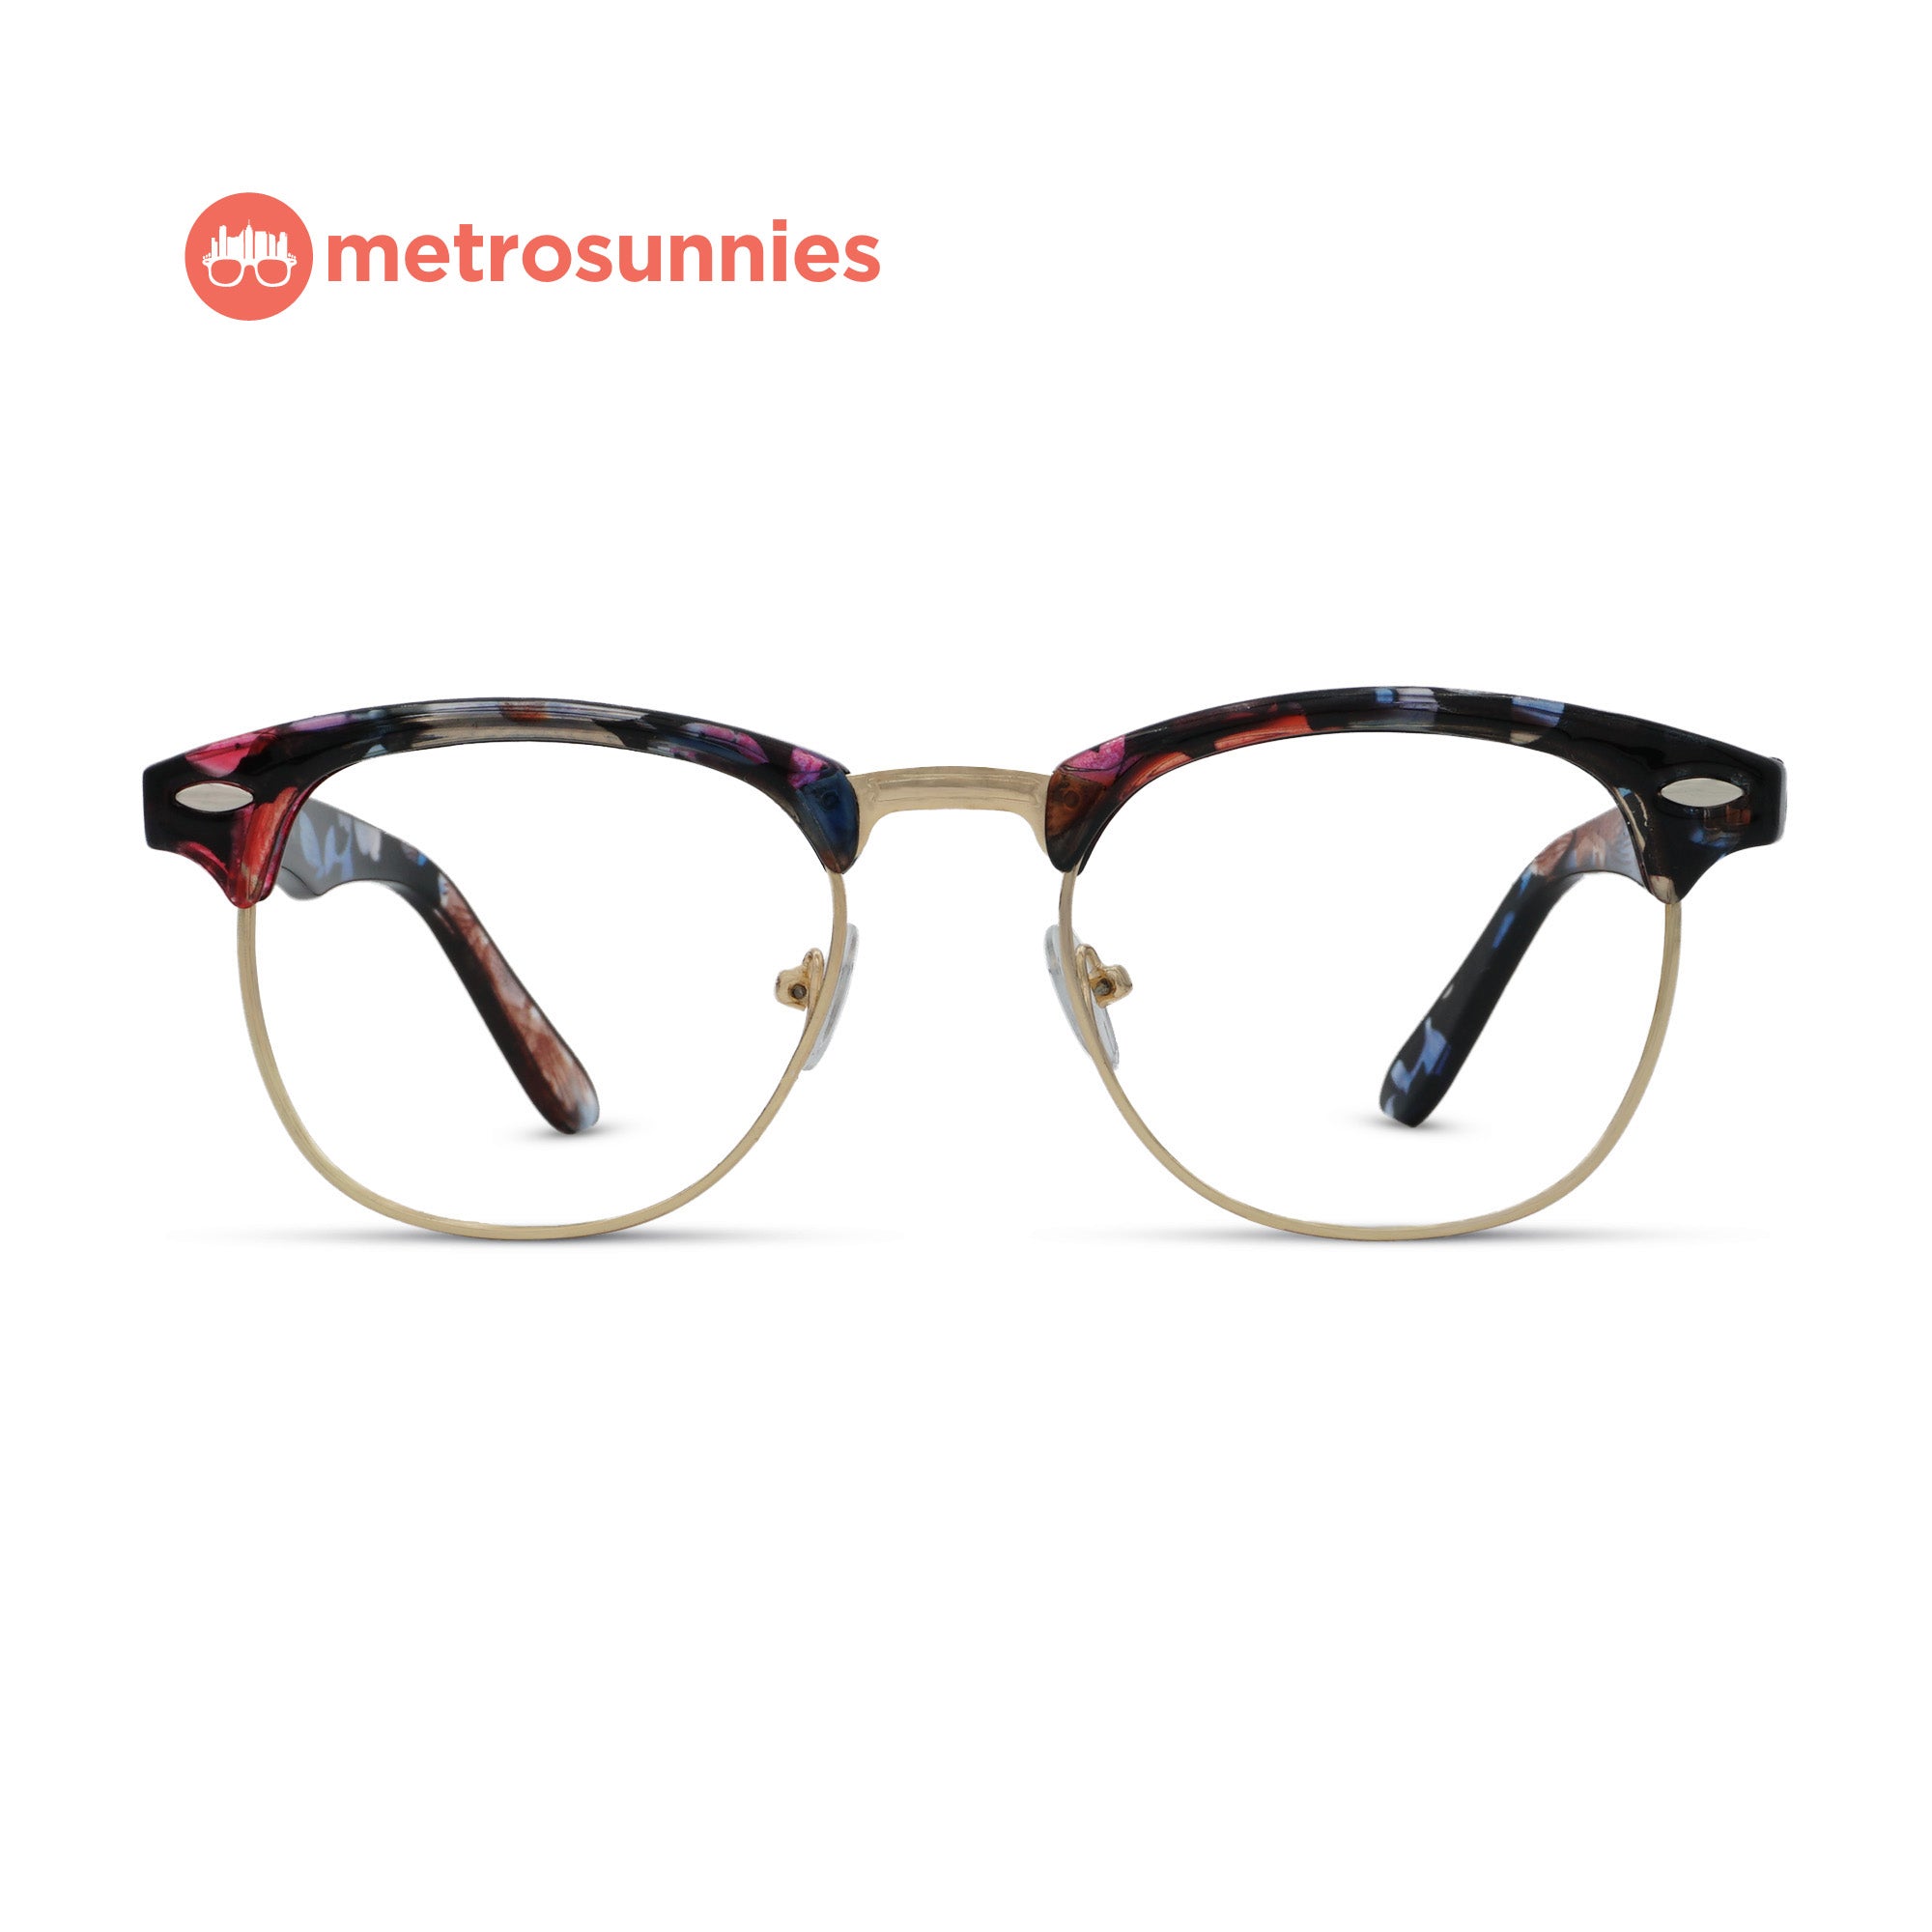 MetroSunnies Midas Specs (Flora) / Replaceable Lens / Eyeglasses for Men and Women